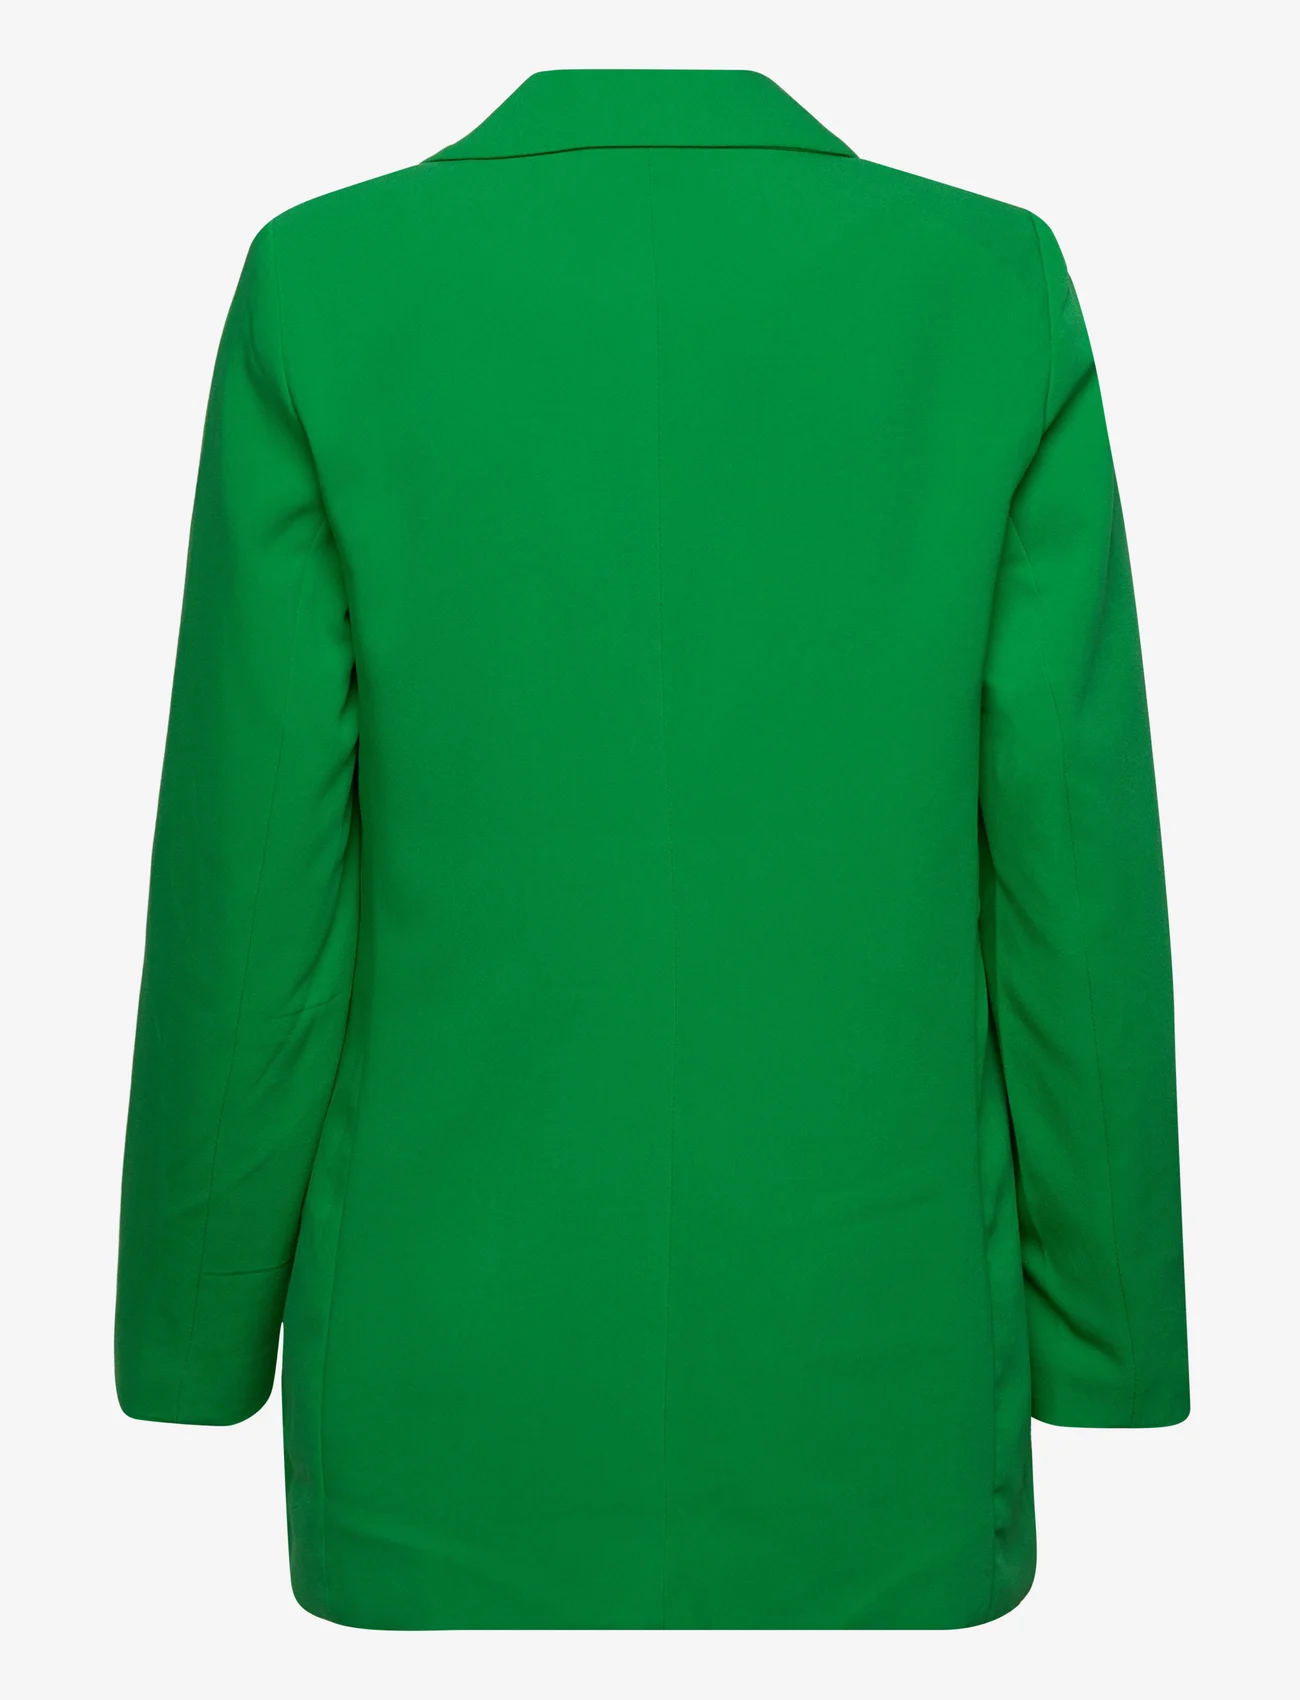 Object - OBJSIGRID L/S BLAZER NOOS - ballīšu apģērbs par outlet cenām - fern green - 1